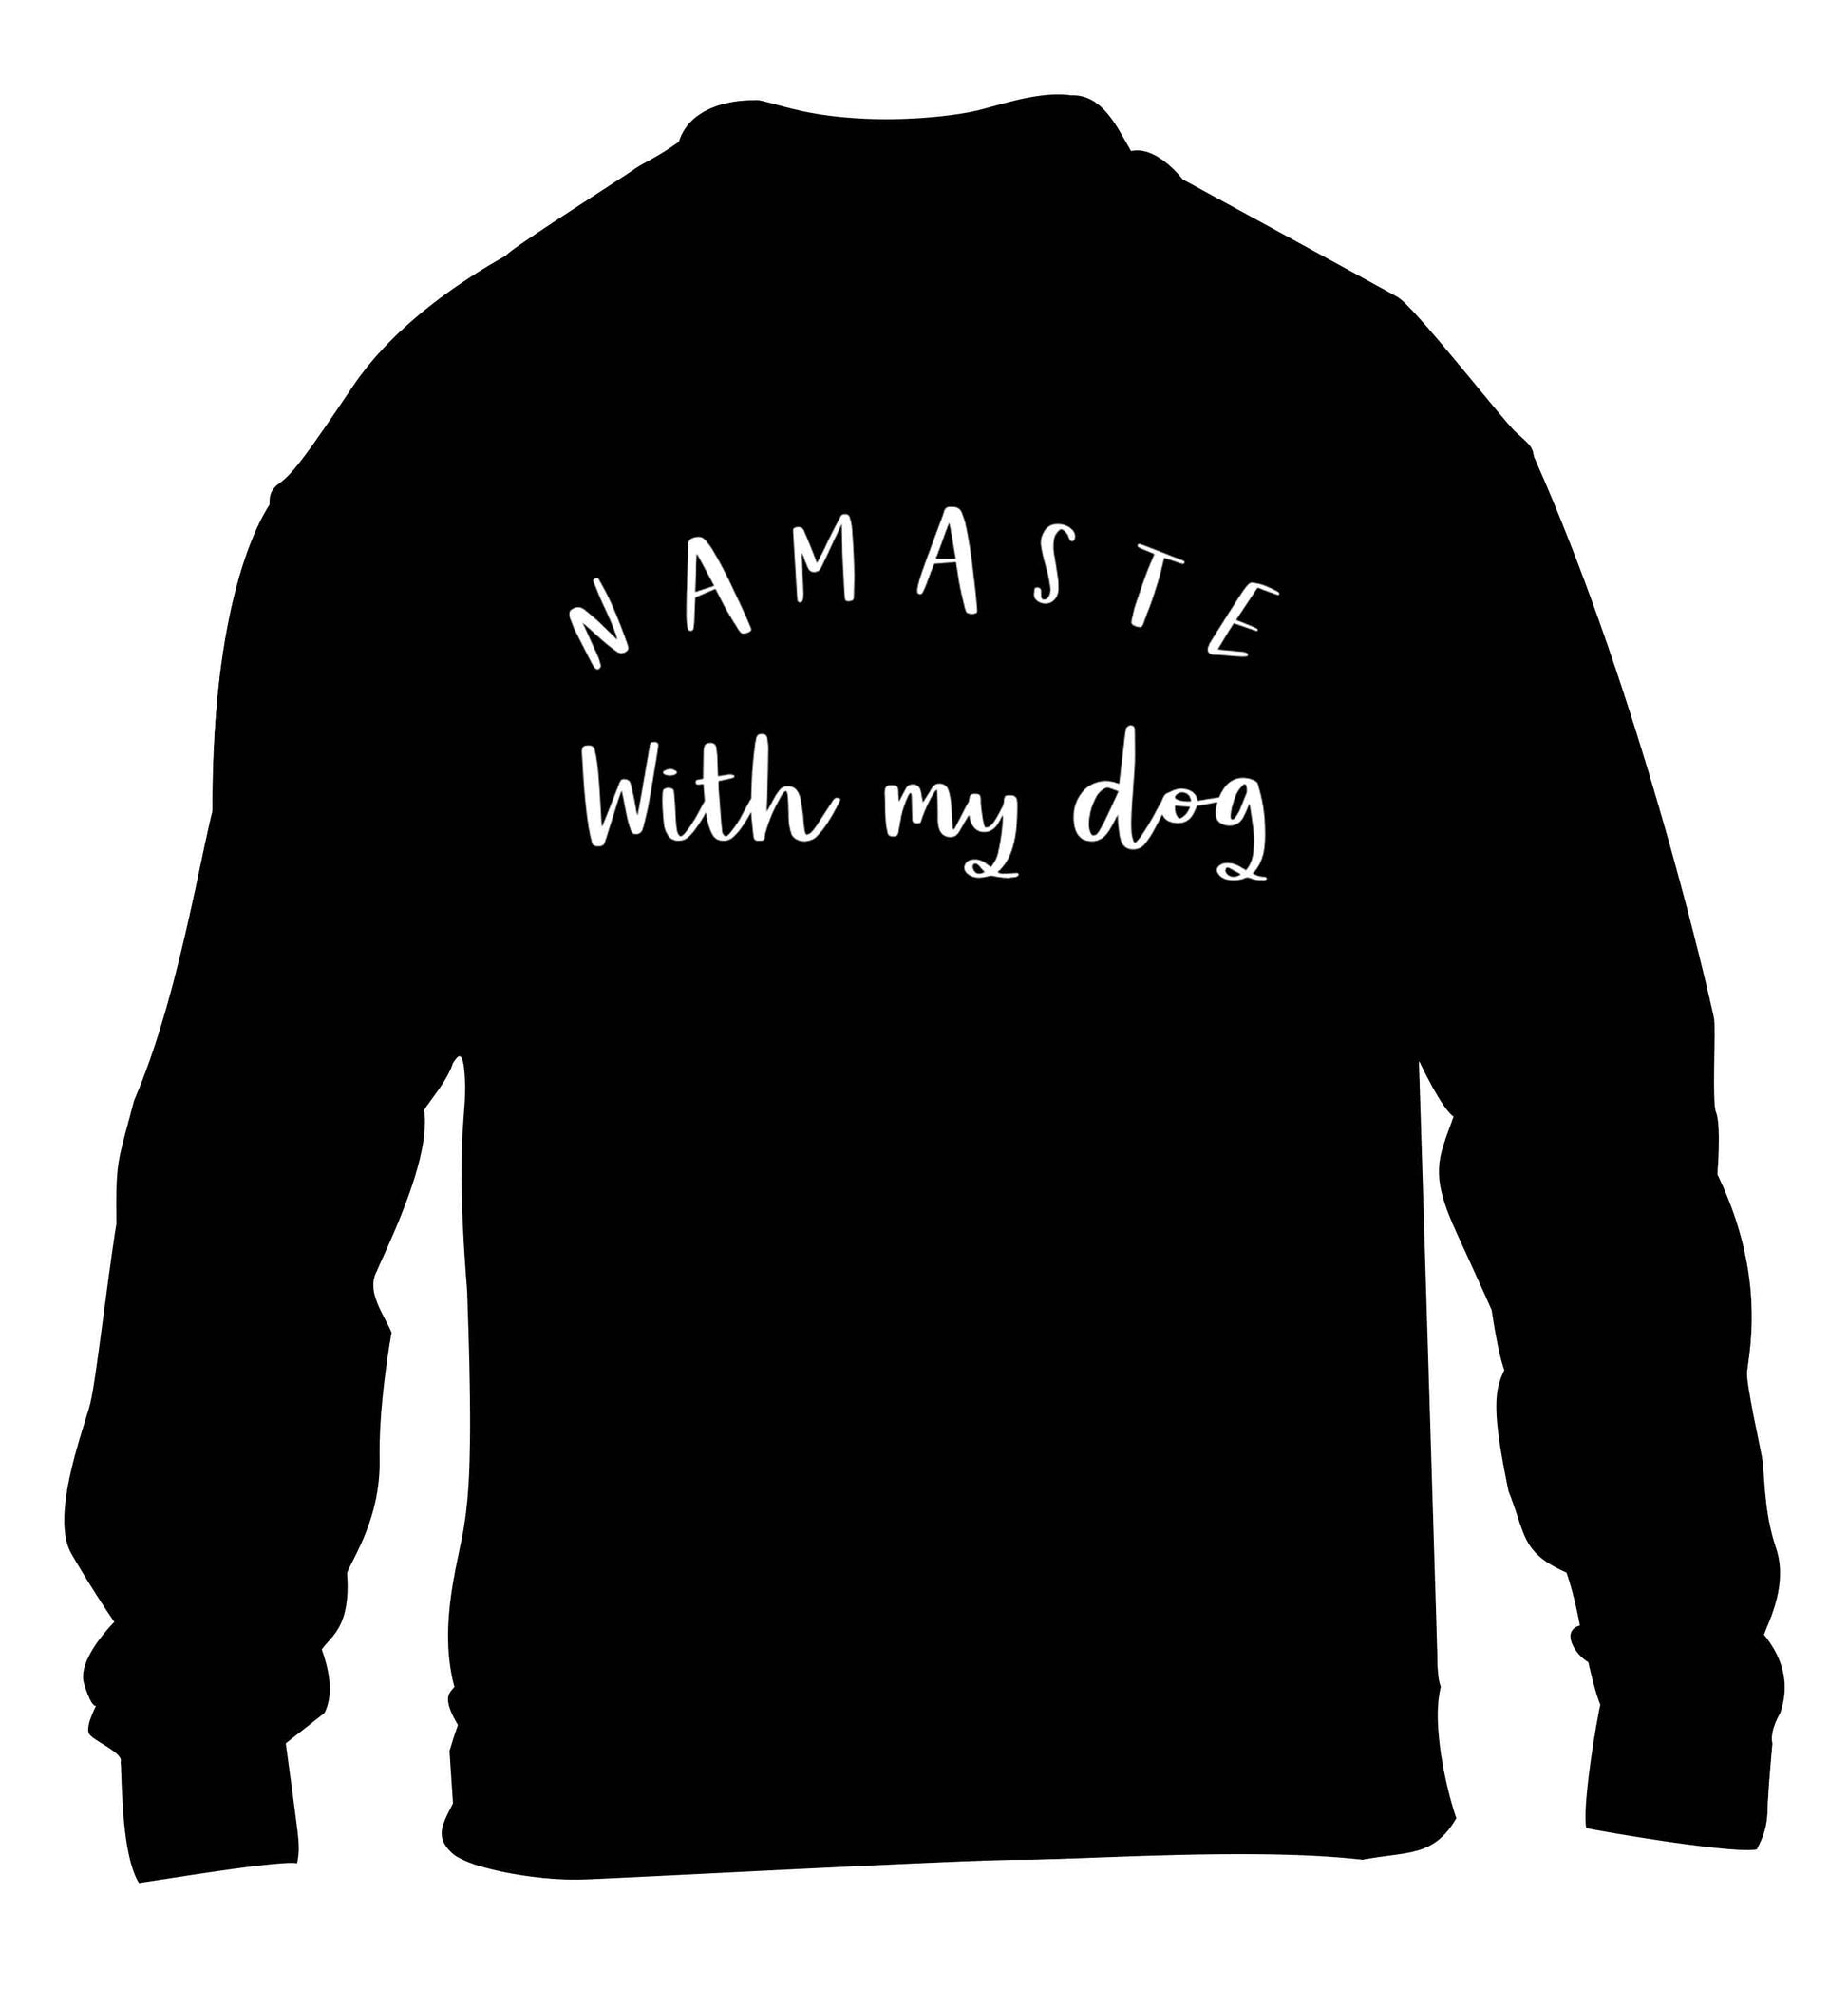 Namaste with my dog children's black sweater 12-13 Years